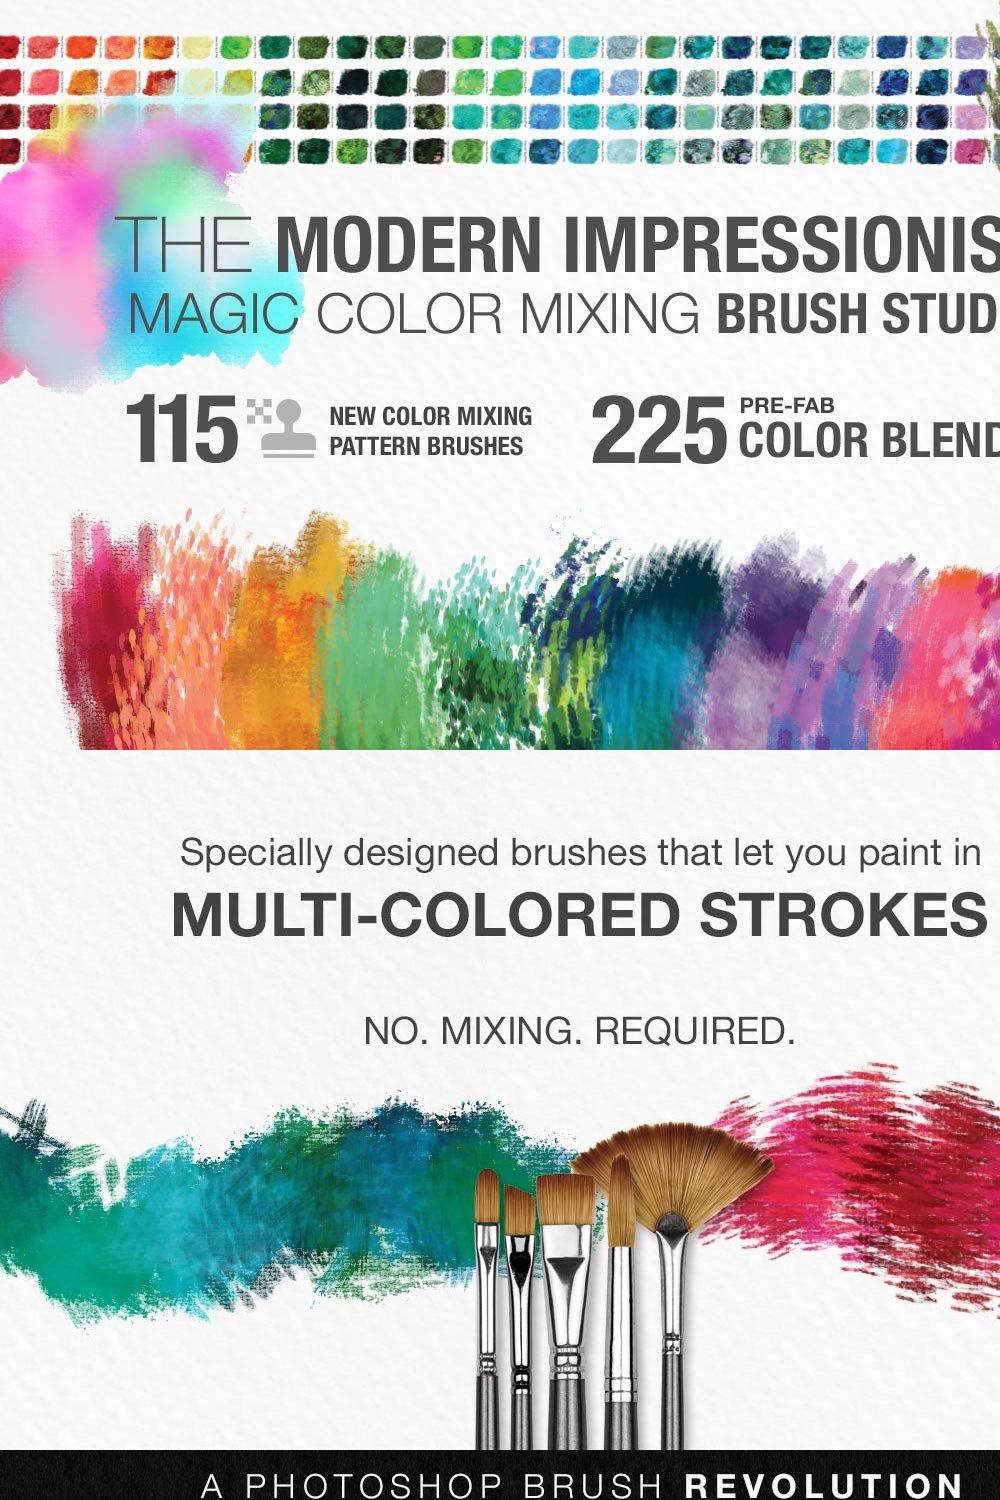 Modern Impressionist PS Brush Studio pinterest preview image.